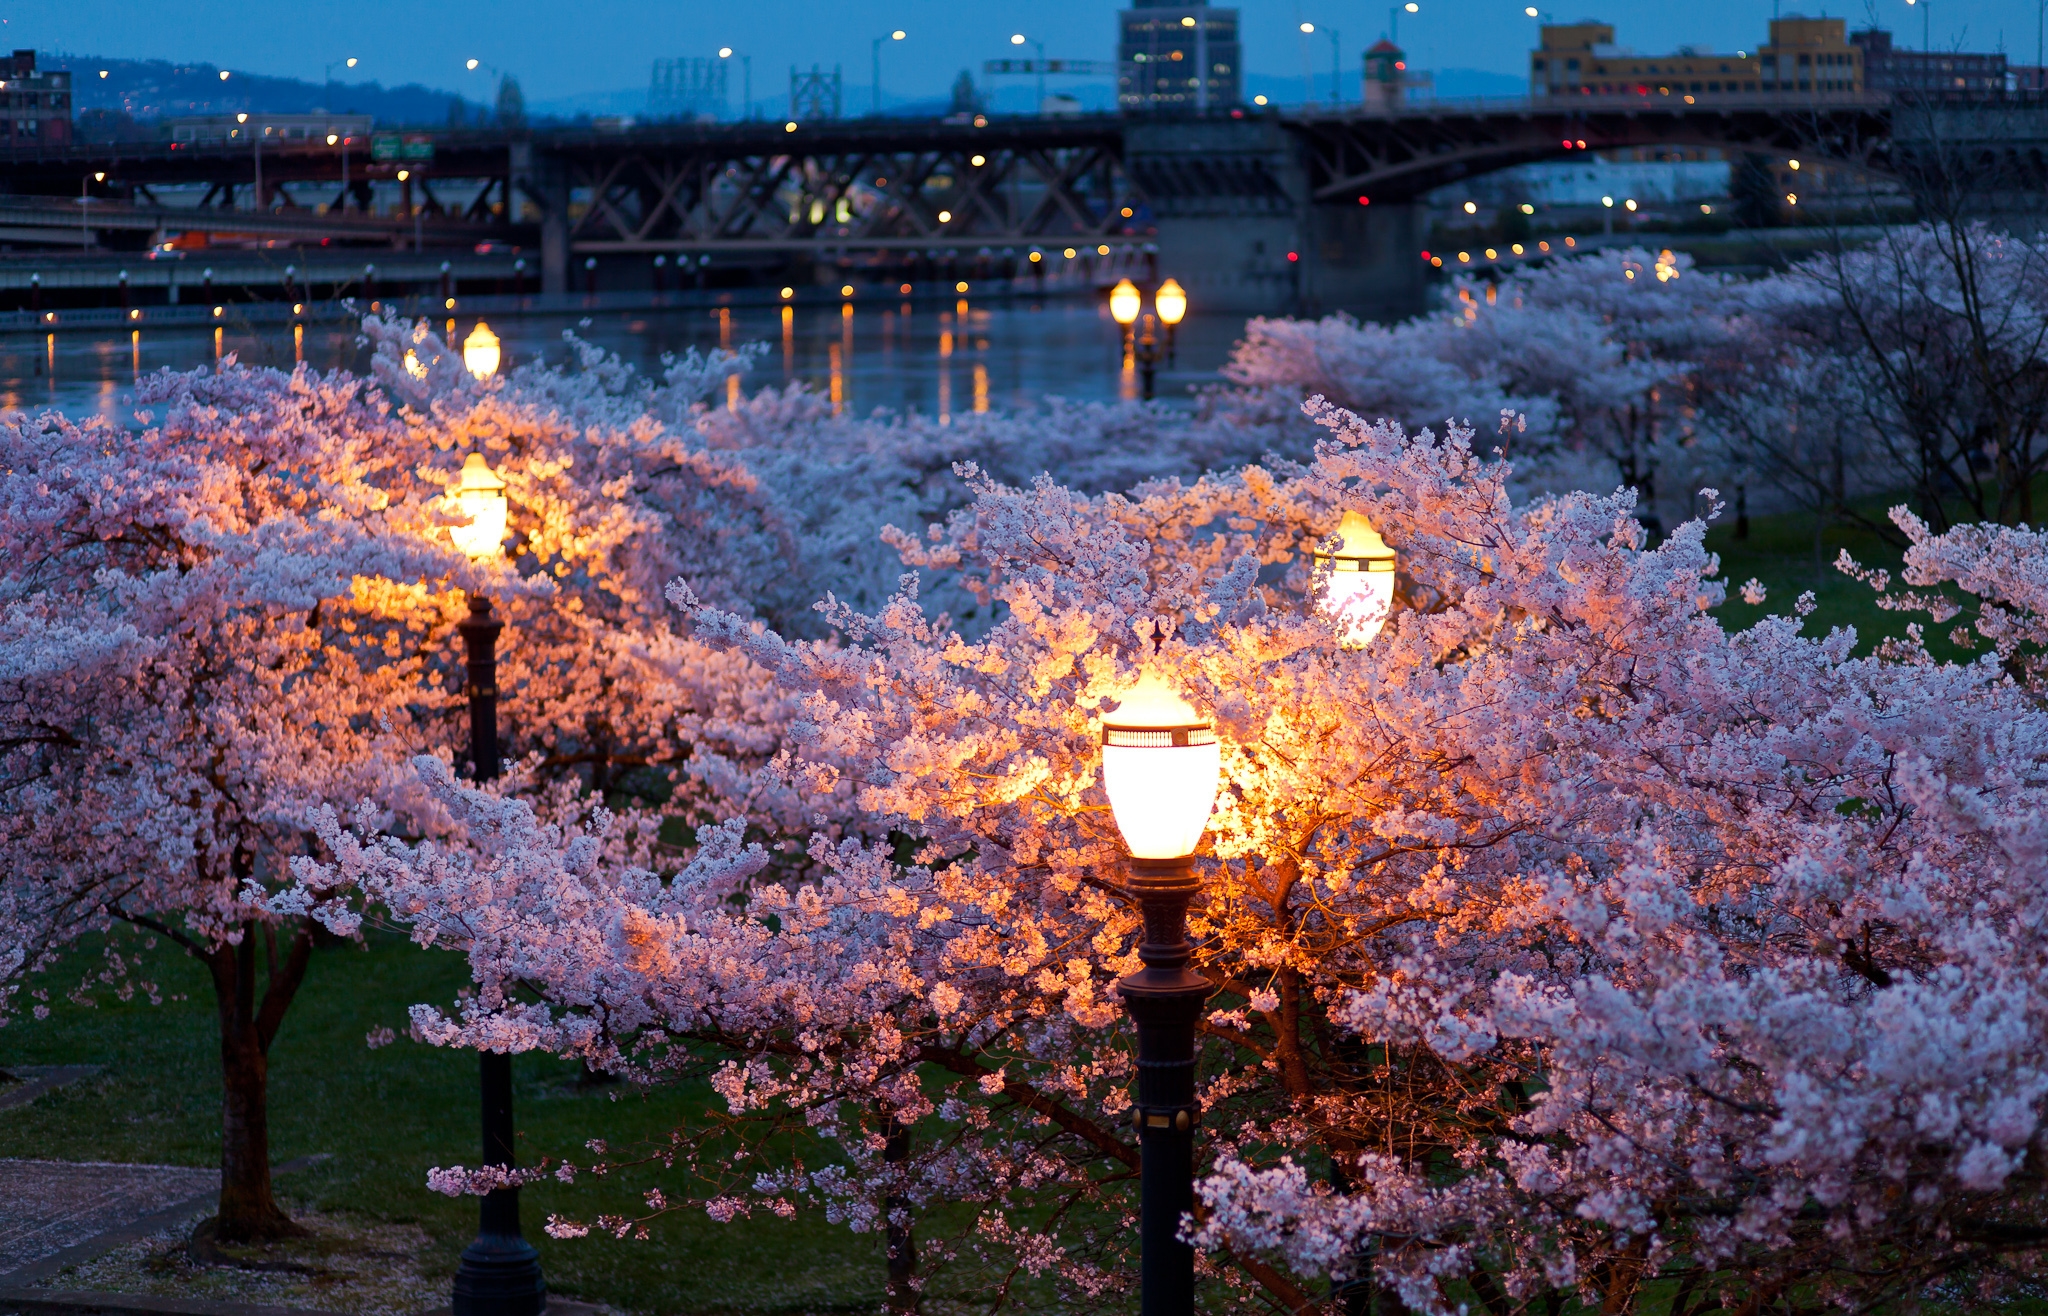 bloom, evening, cities, rivers, bridges, trees, night, city, lights, park, lanterns, color, spring